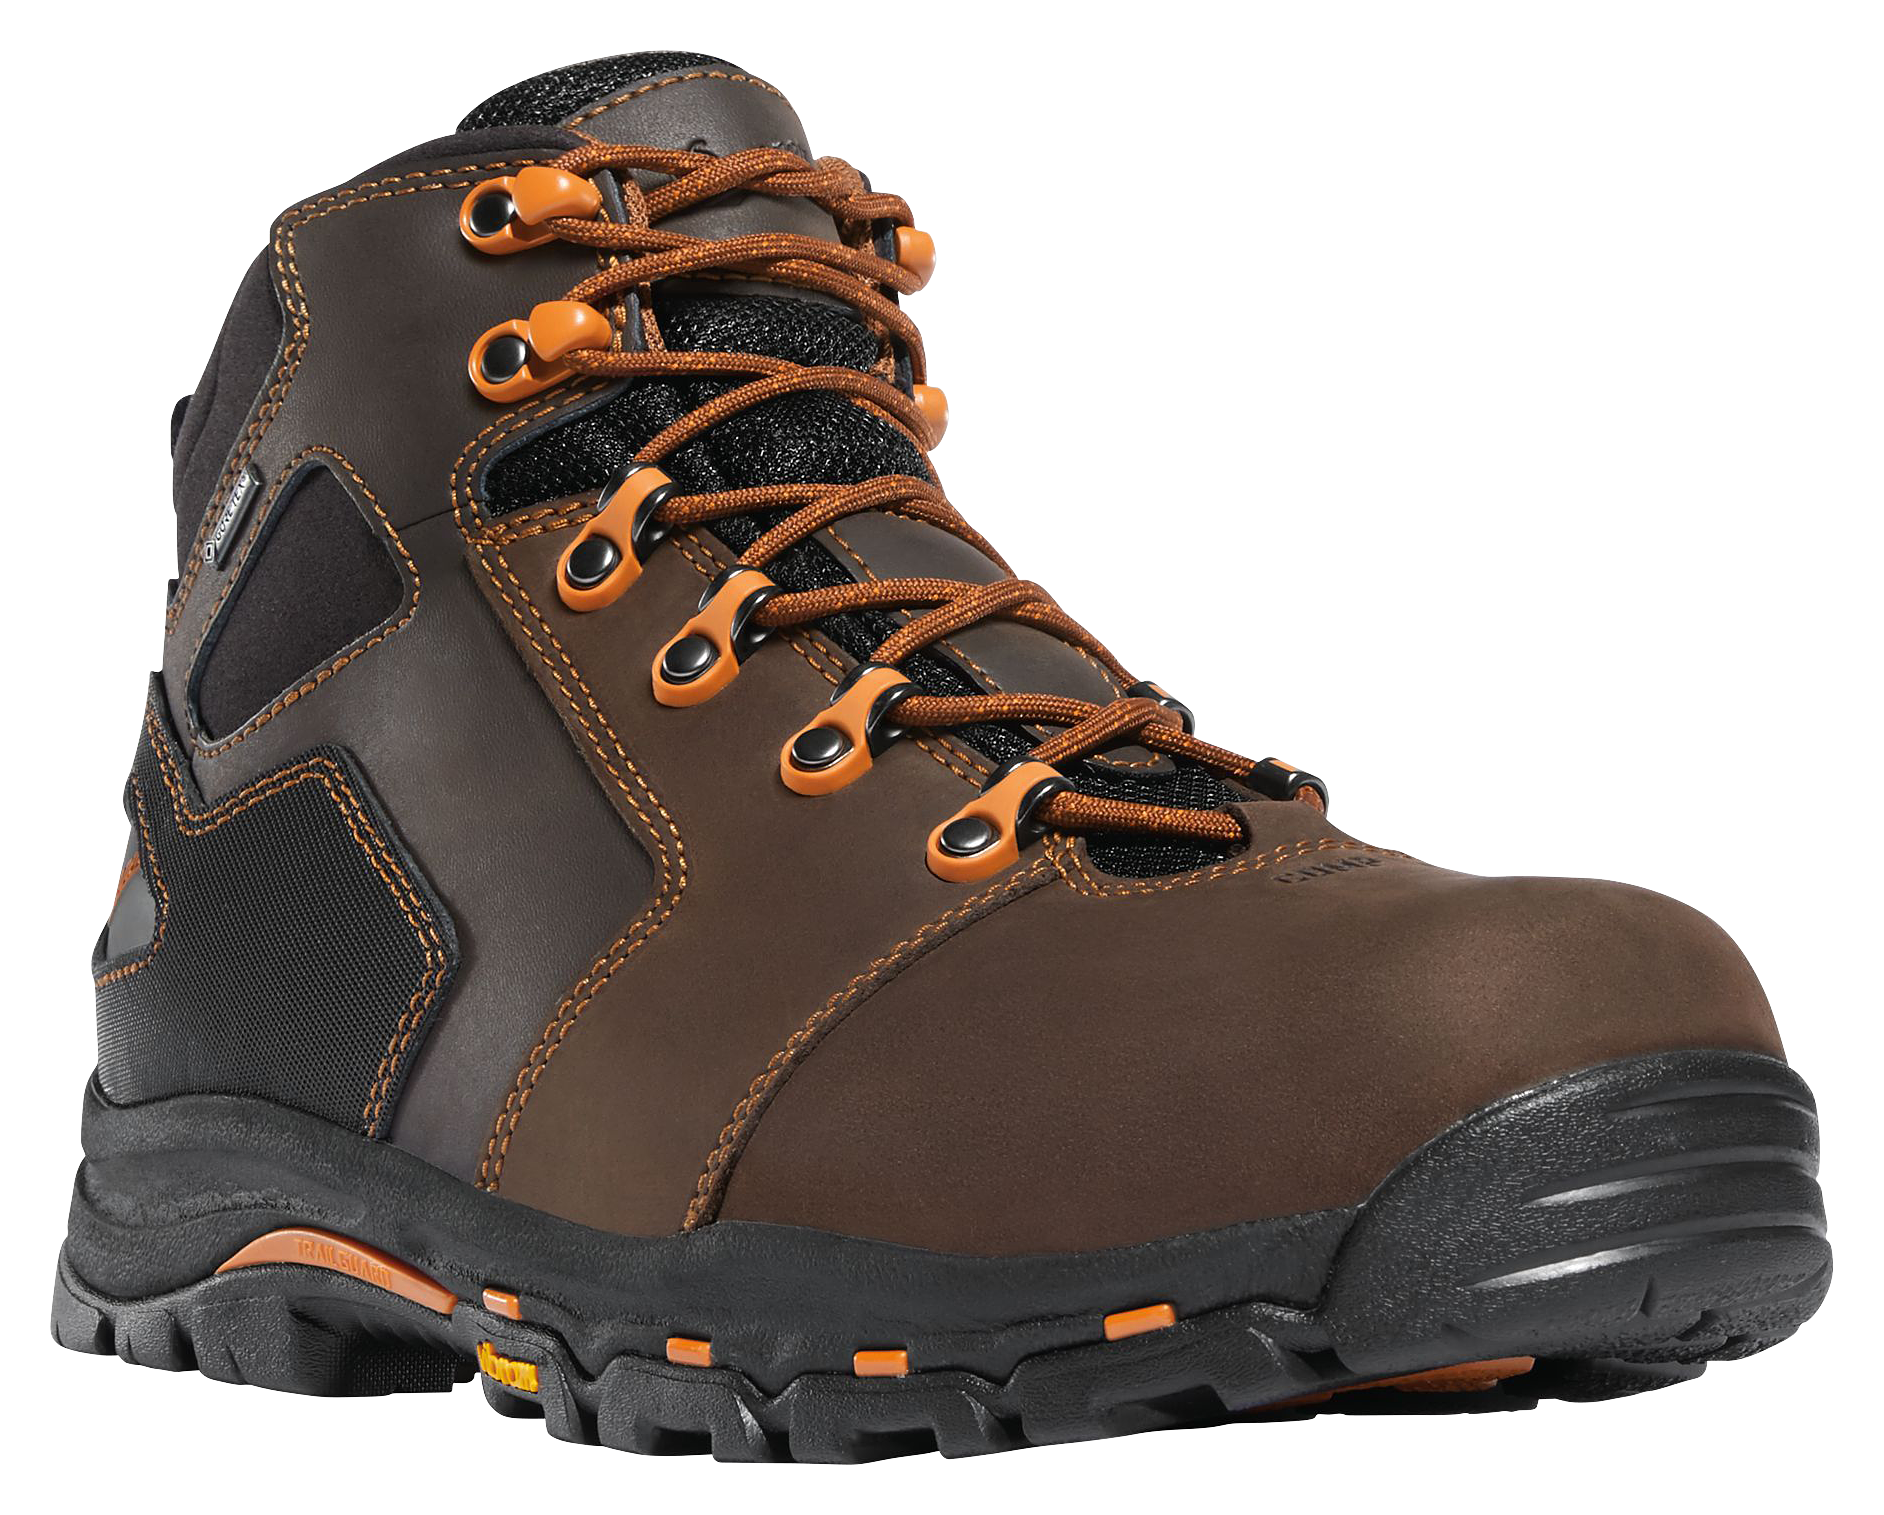 Danner Vicious 4.5'' GORE-TEX EH Work Boots for Men - Brown/Orange - 11.5M